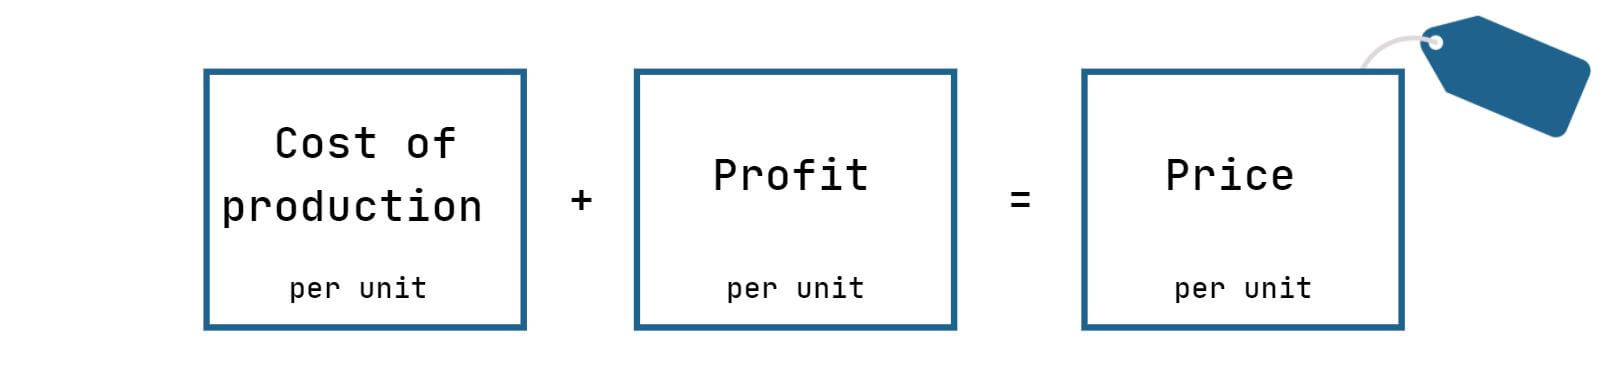 Cost of production per unit + profit per unit = price per unit